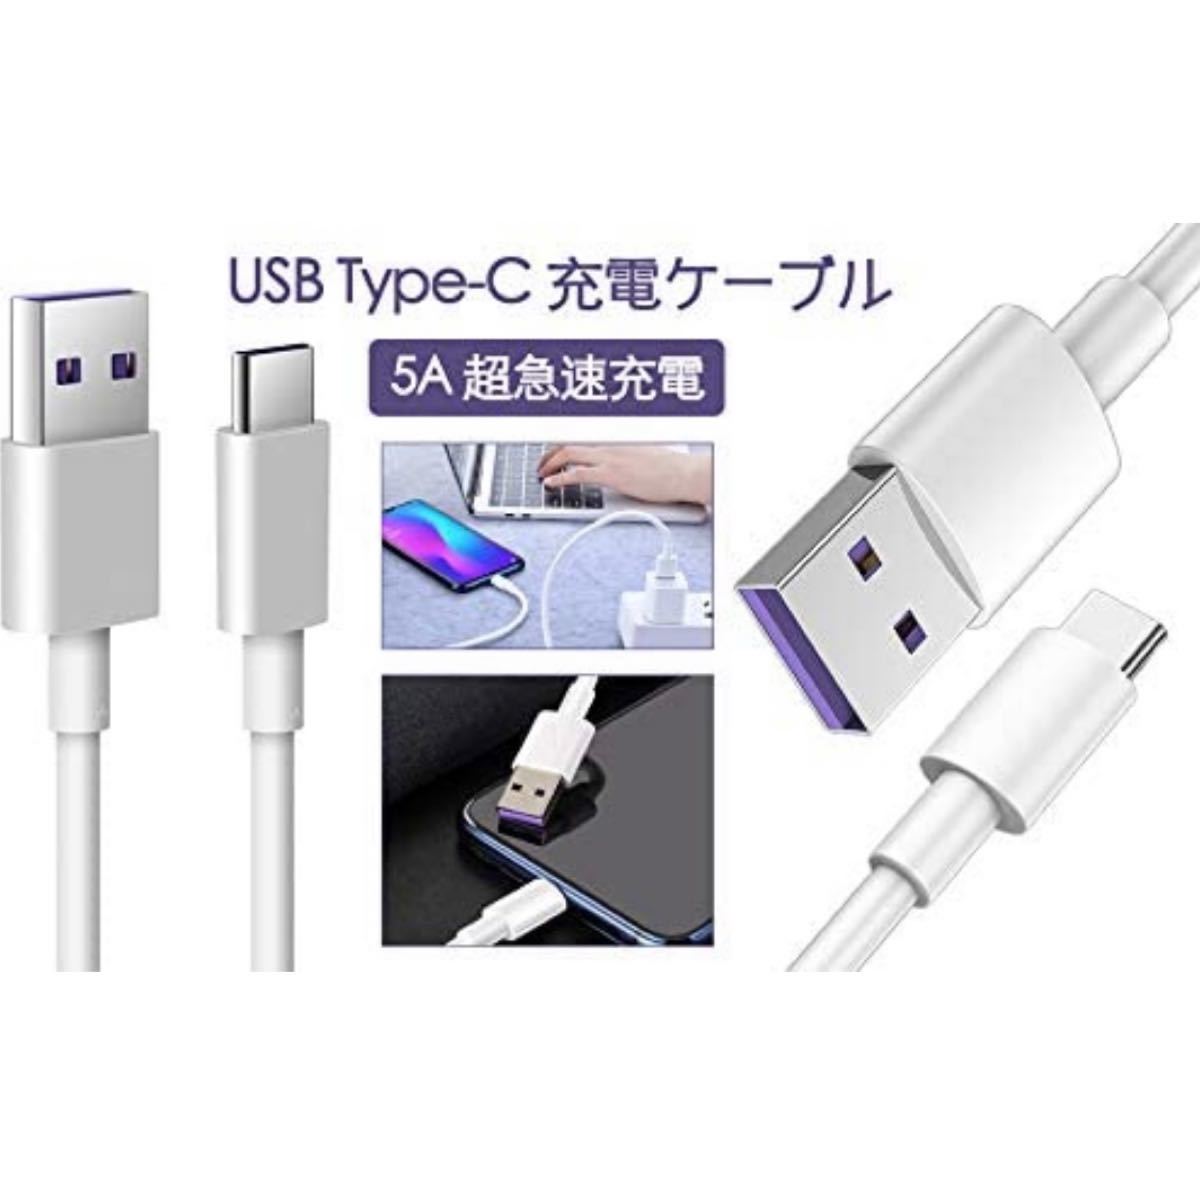 2M Type C USB 充電ケーブル 5A 超急速充電 Huawei SuperCharge対応 Type-C機器対応 TPE